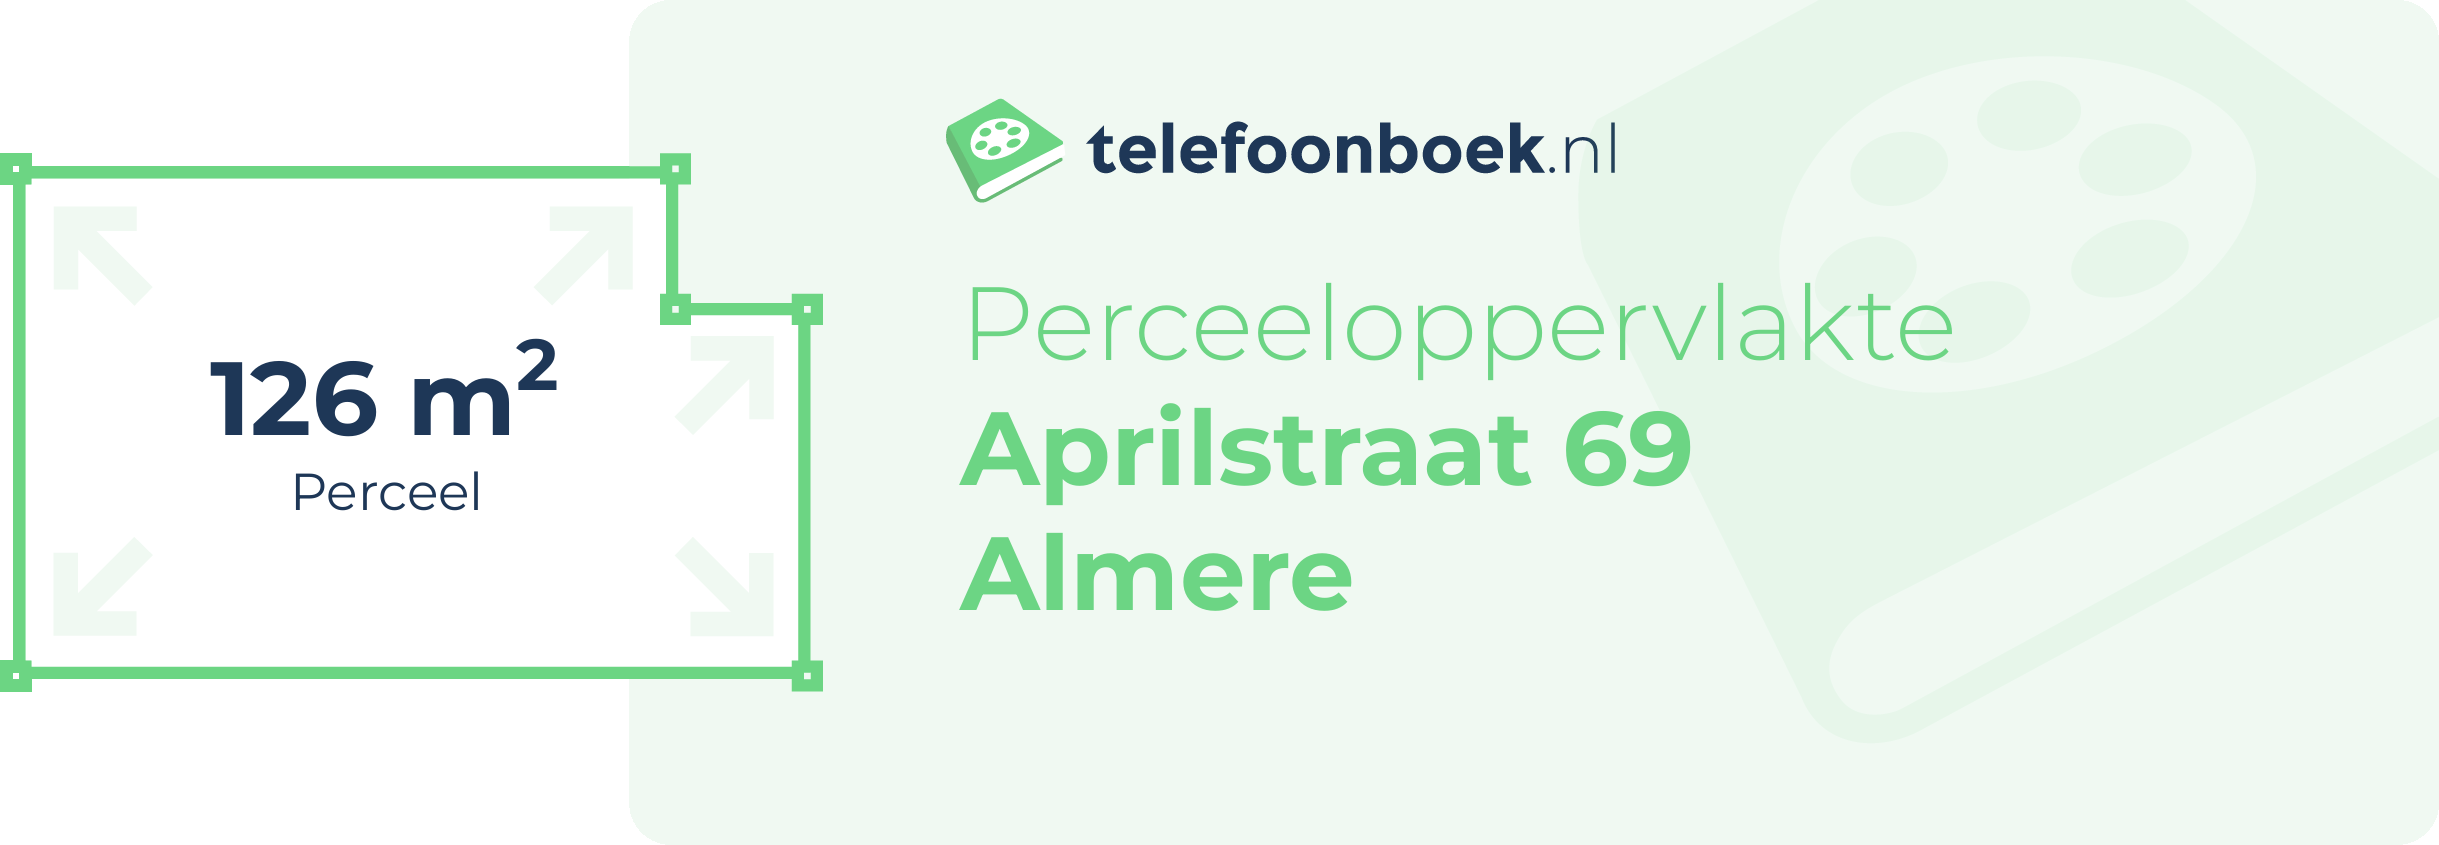 Perceeloppervlakte Aprilstraat 69 Almere